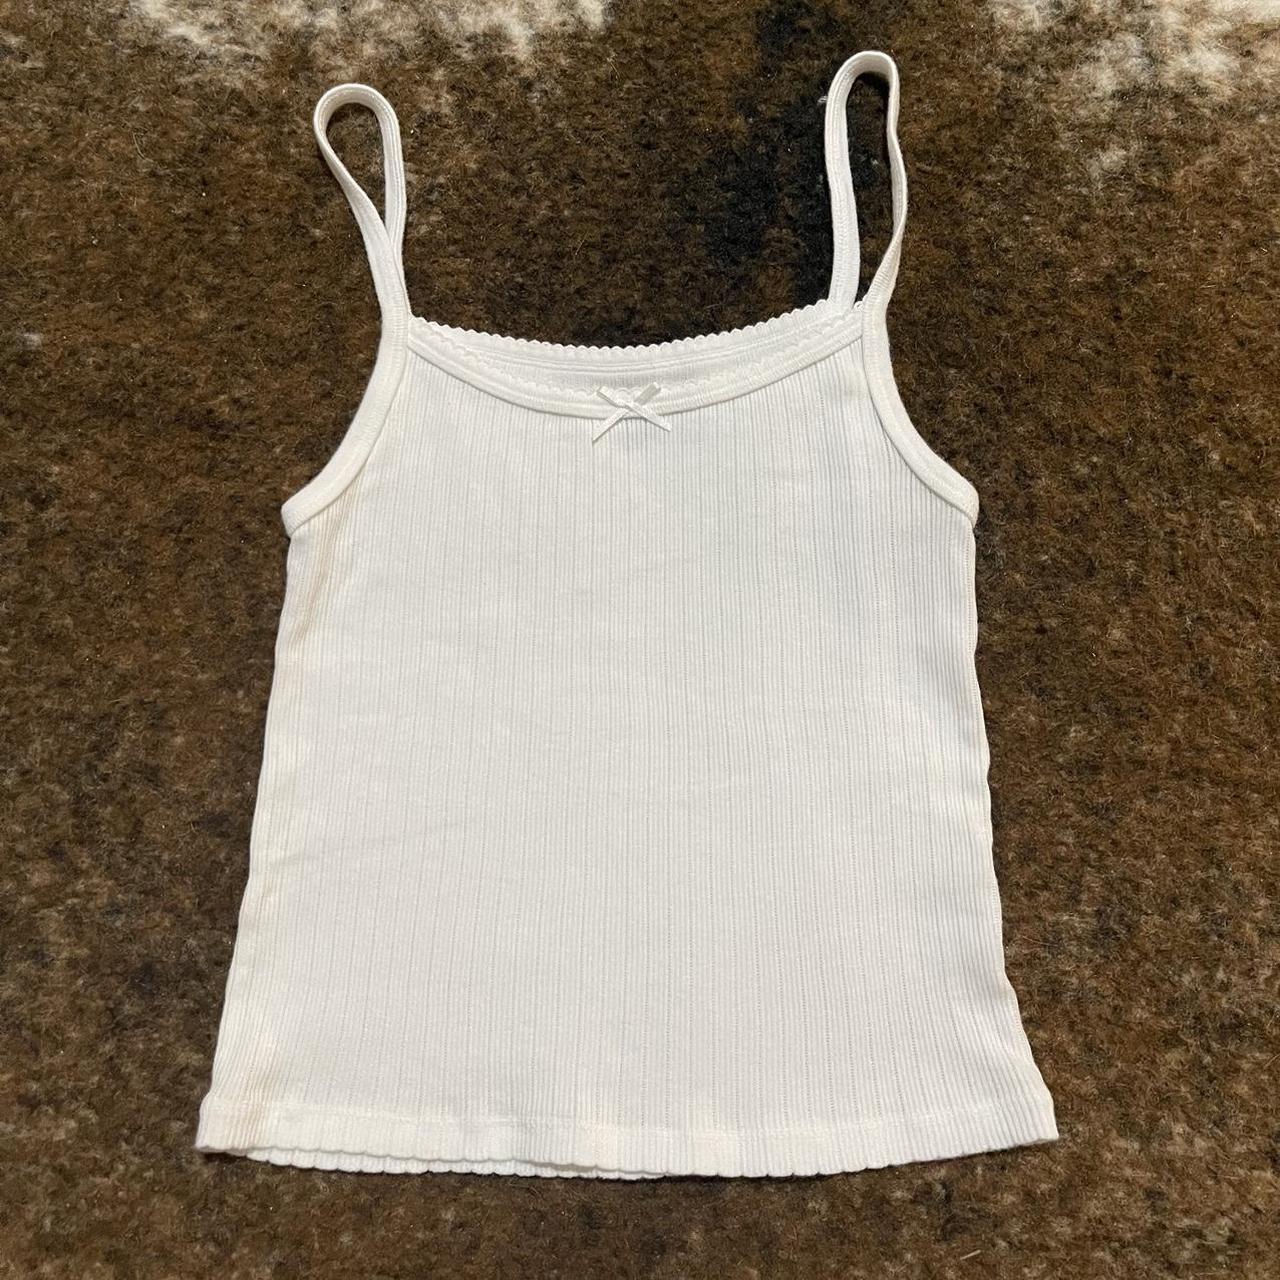 Brandy Melville Women's Vest | Depop